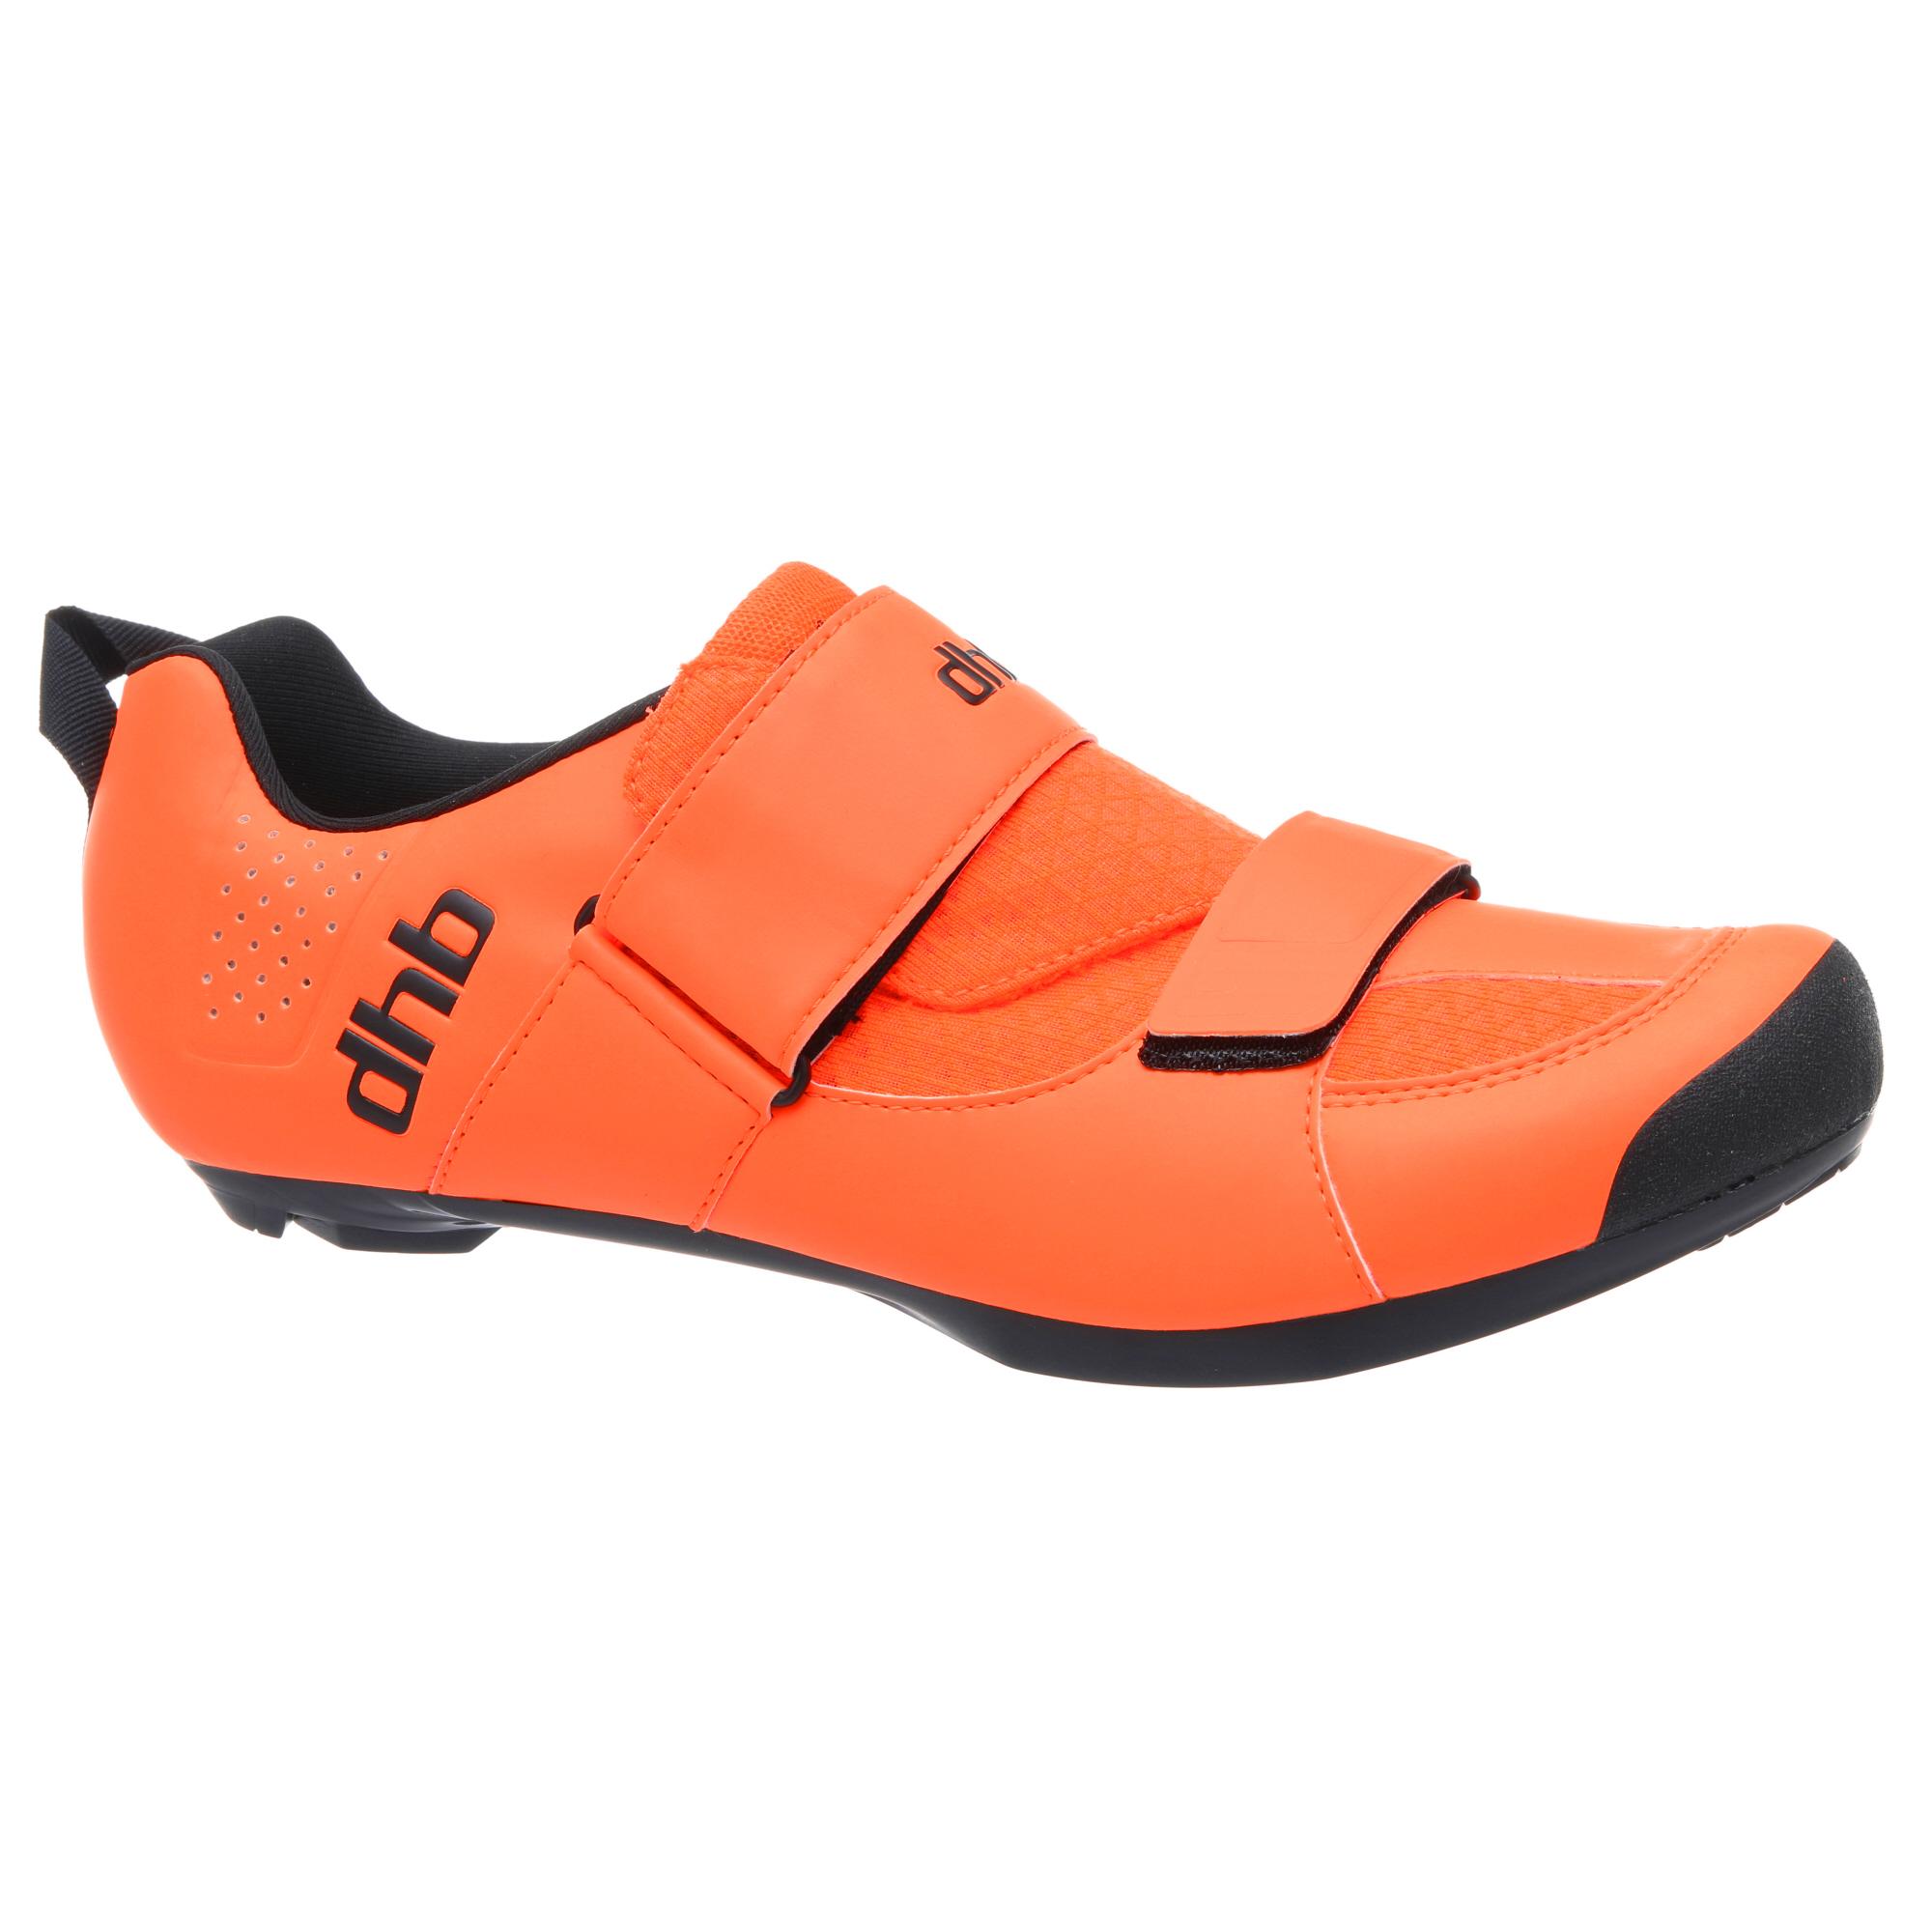 Dhb Trinity Tri Shoe  Orange